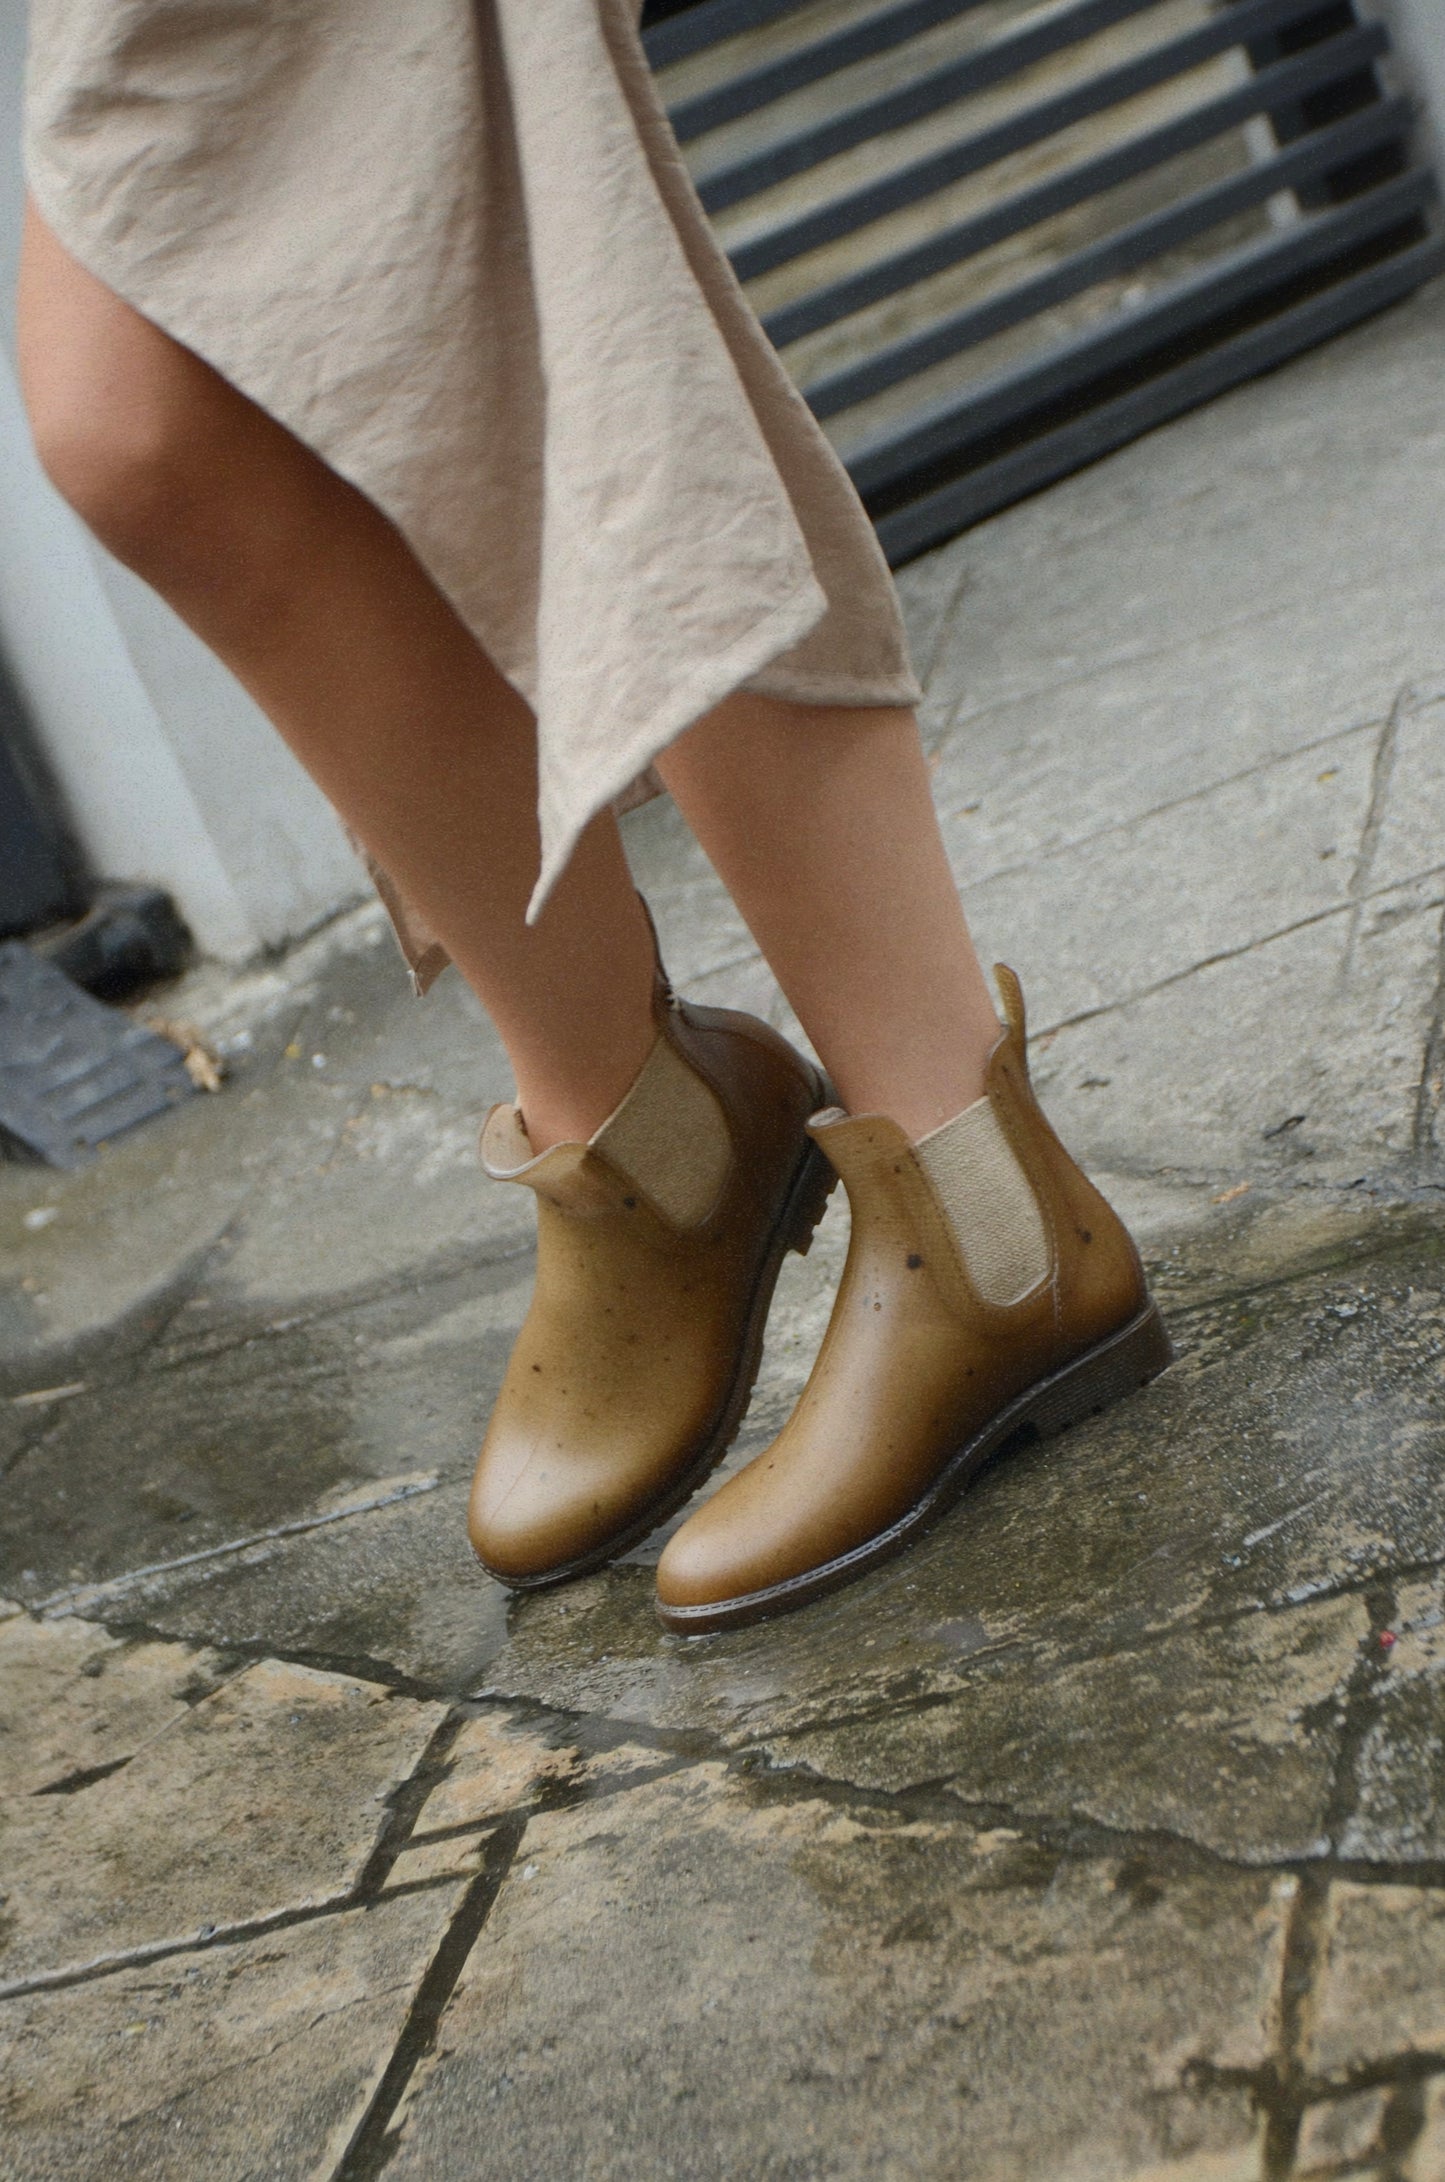 Chelsea Rain Boots